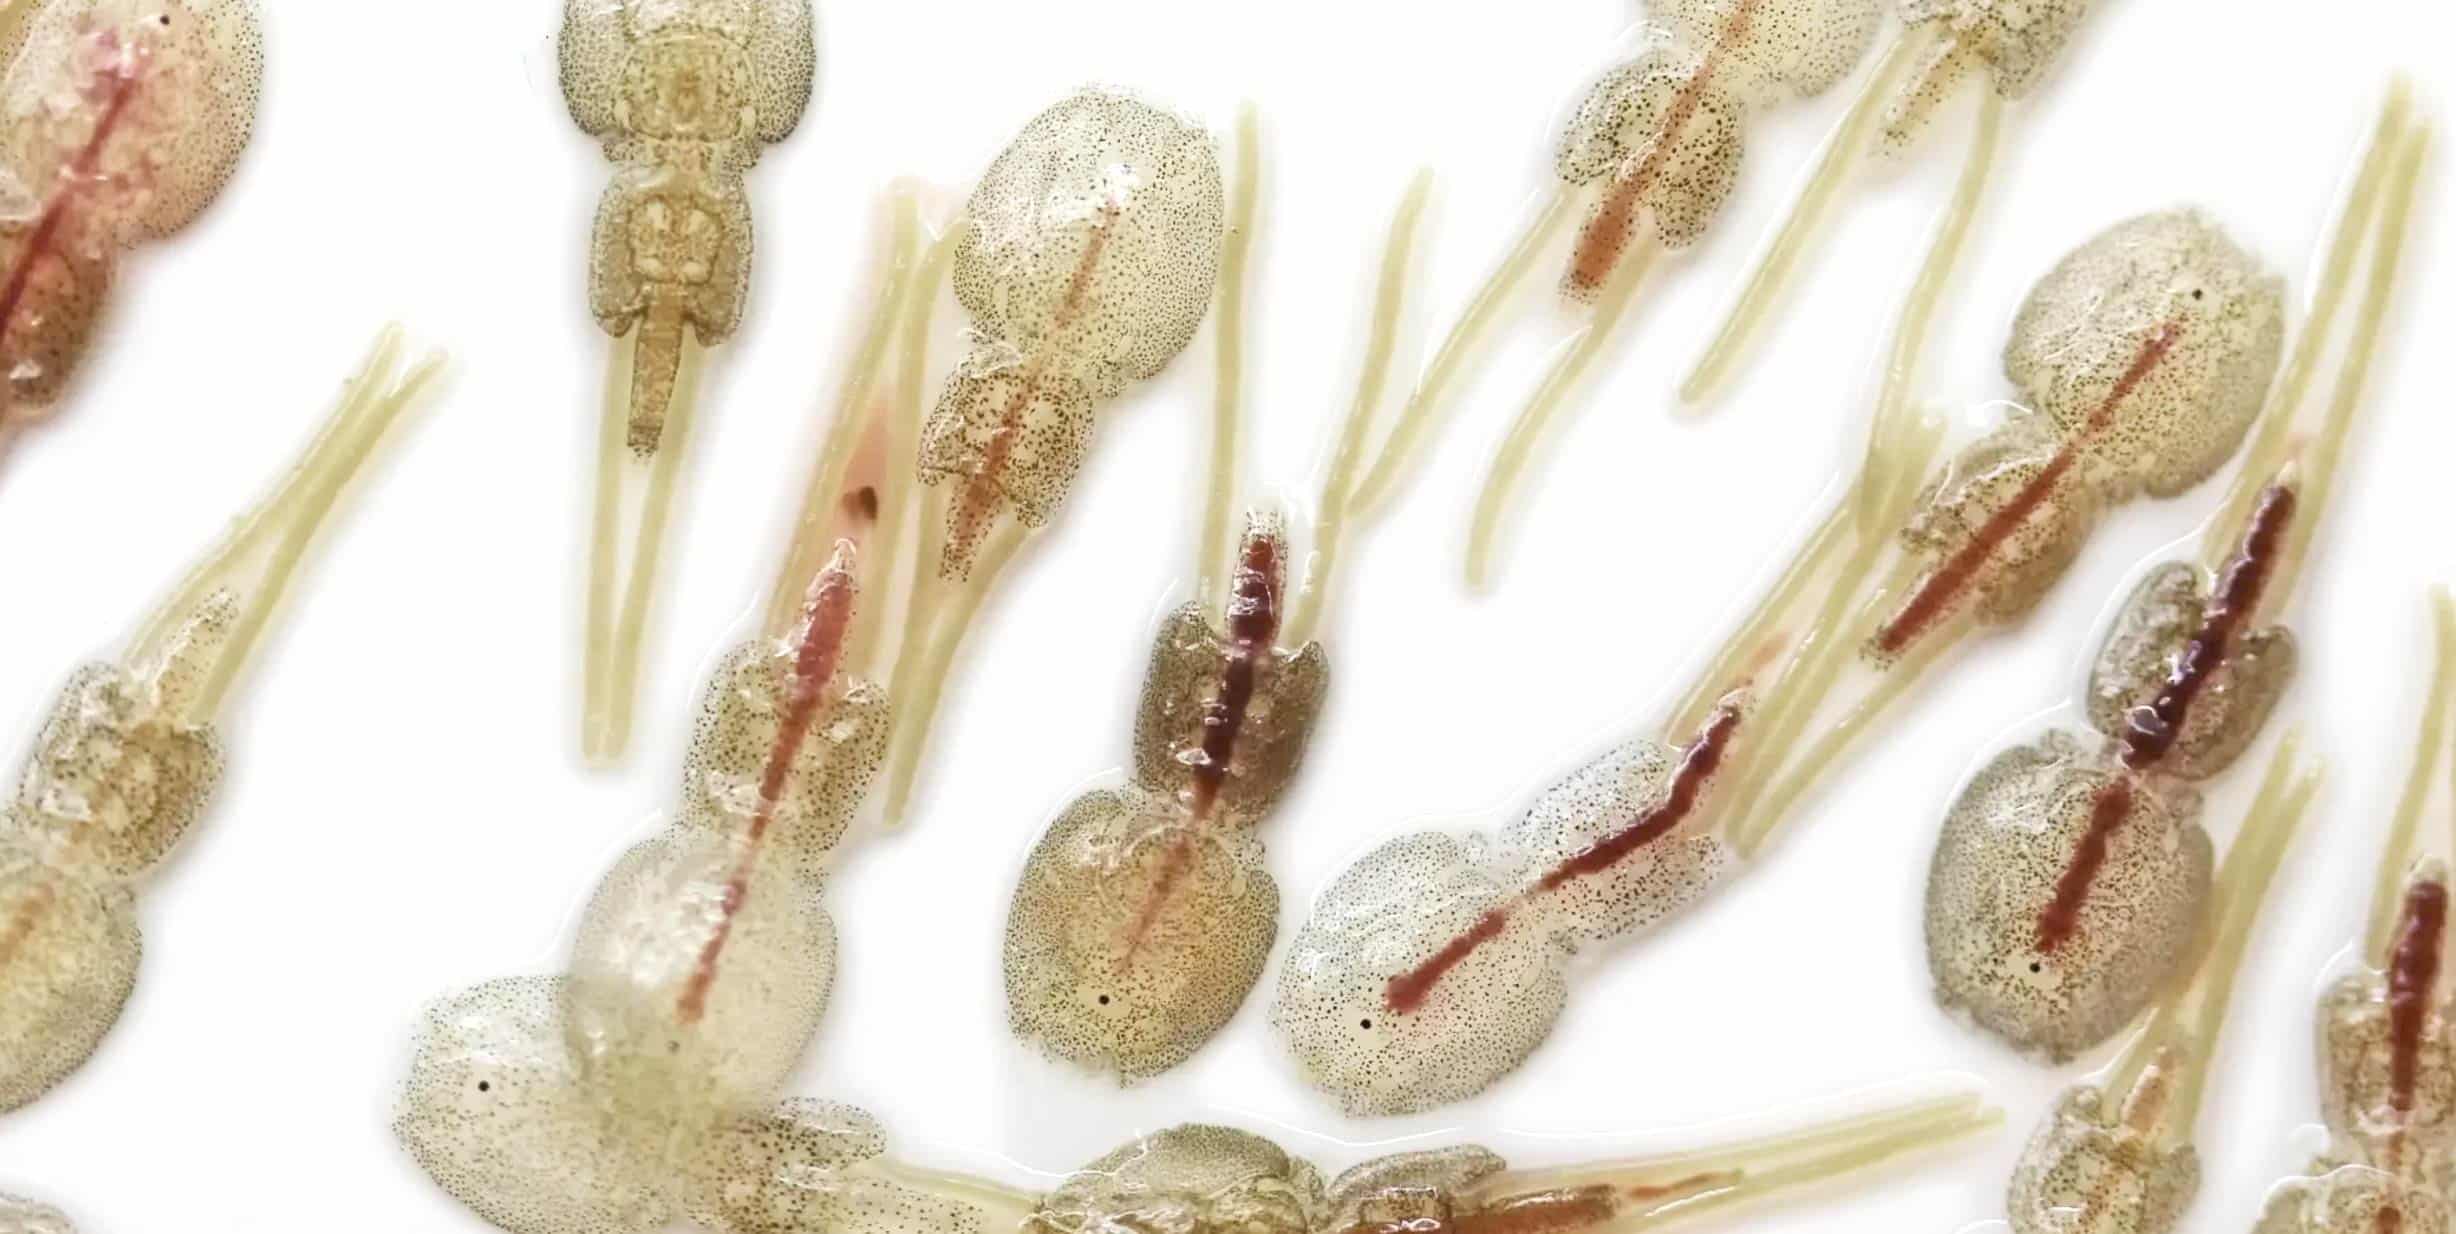 blood-sucking fish lice